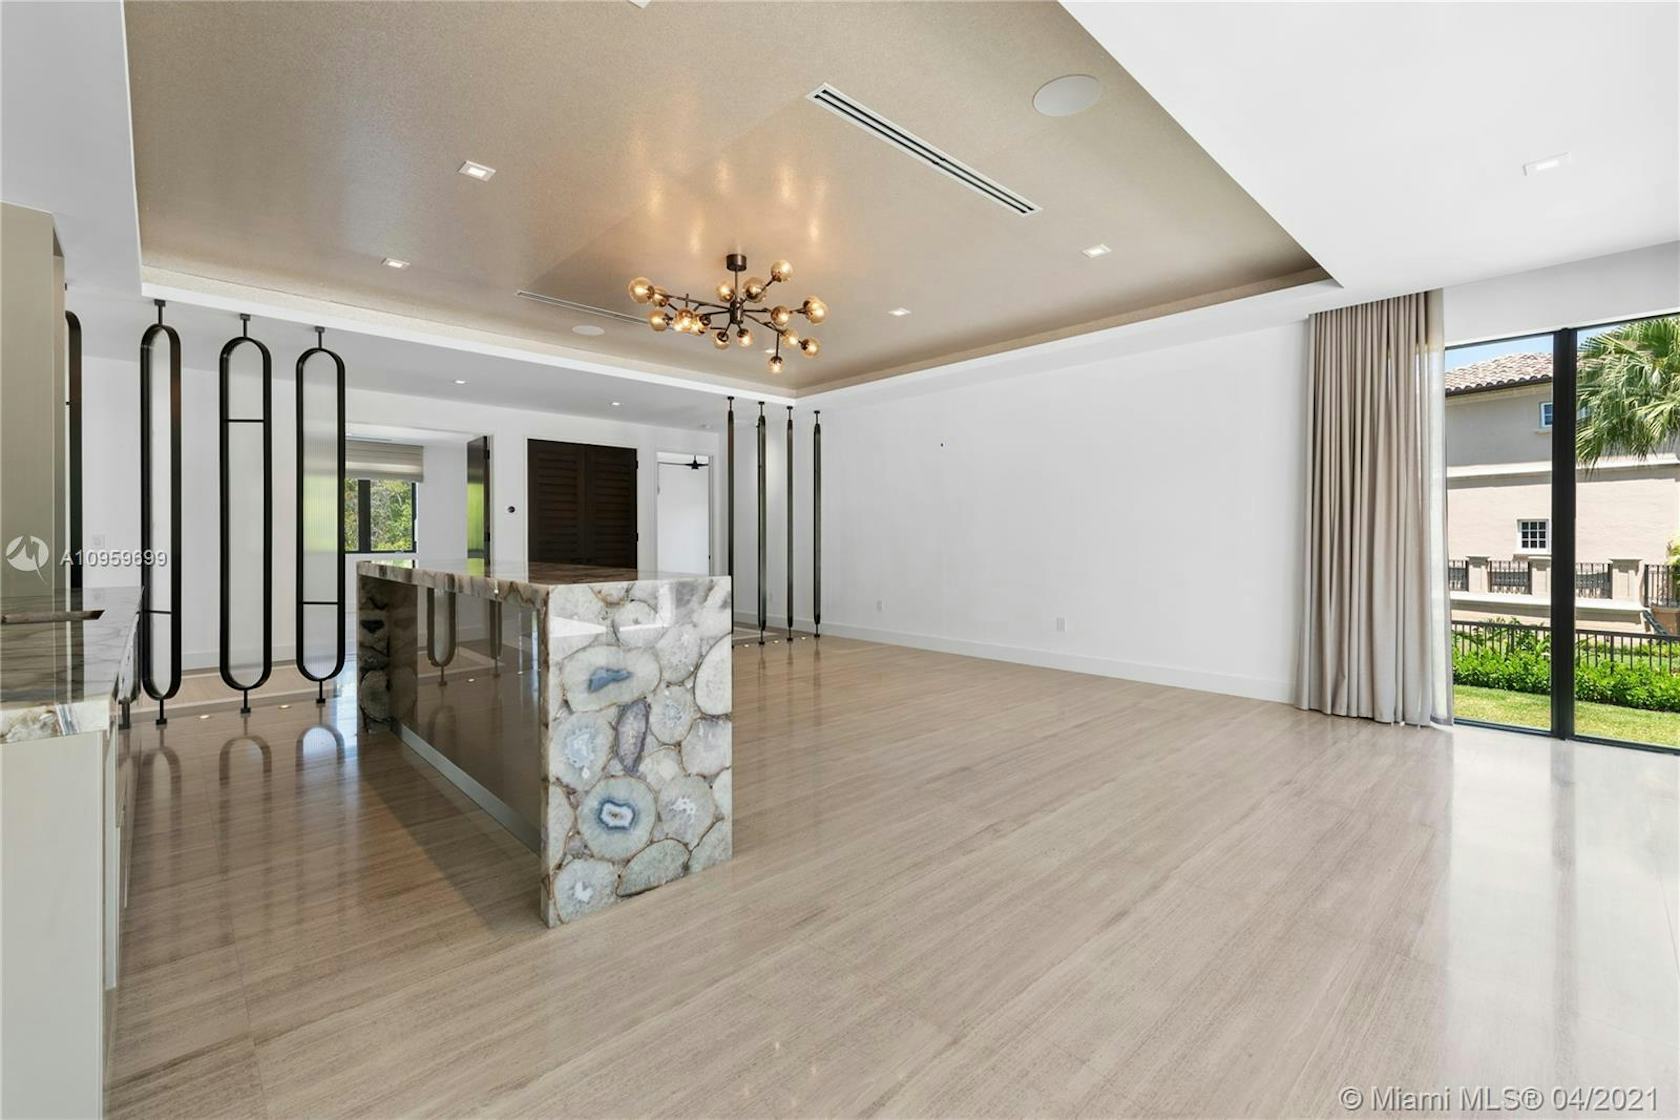 flooring floor furniture wood interior design indoors